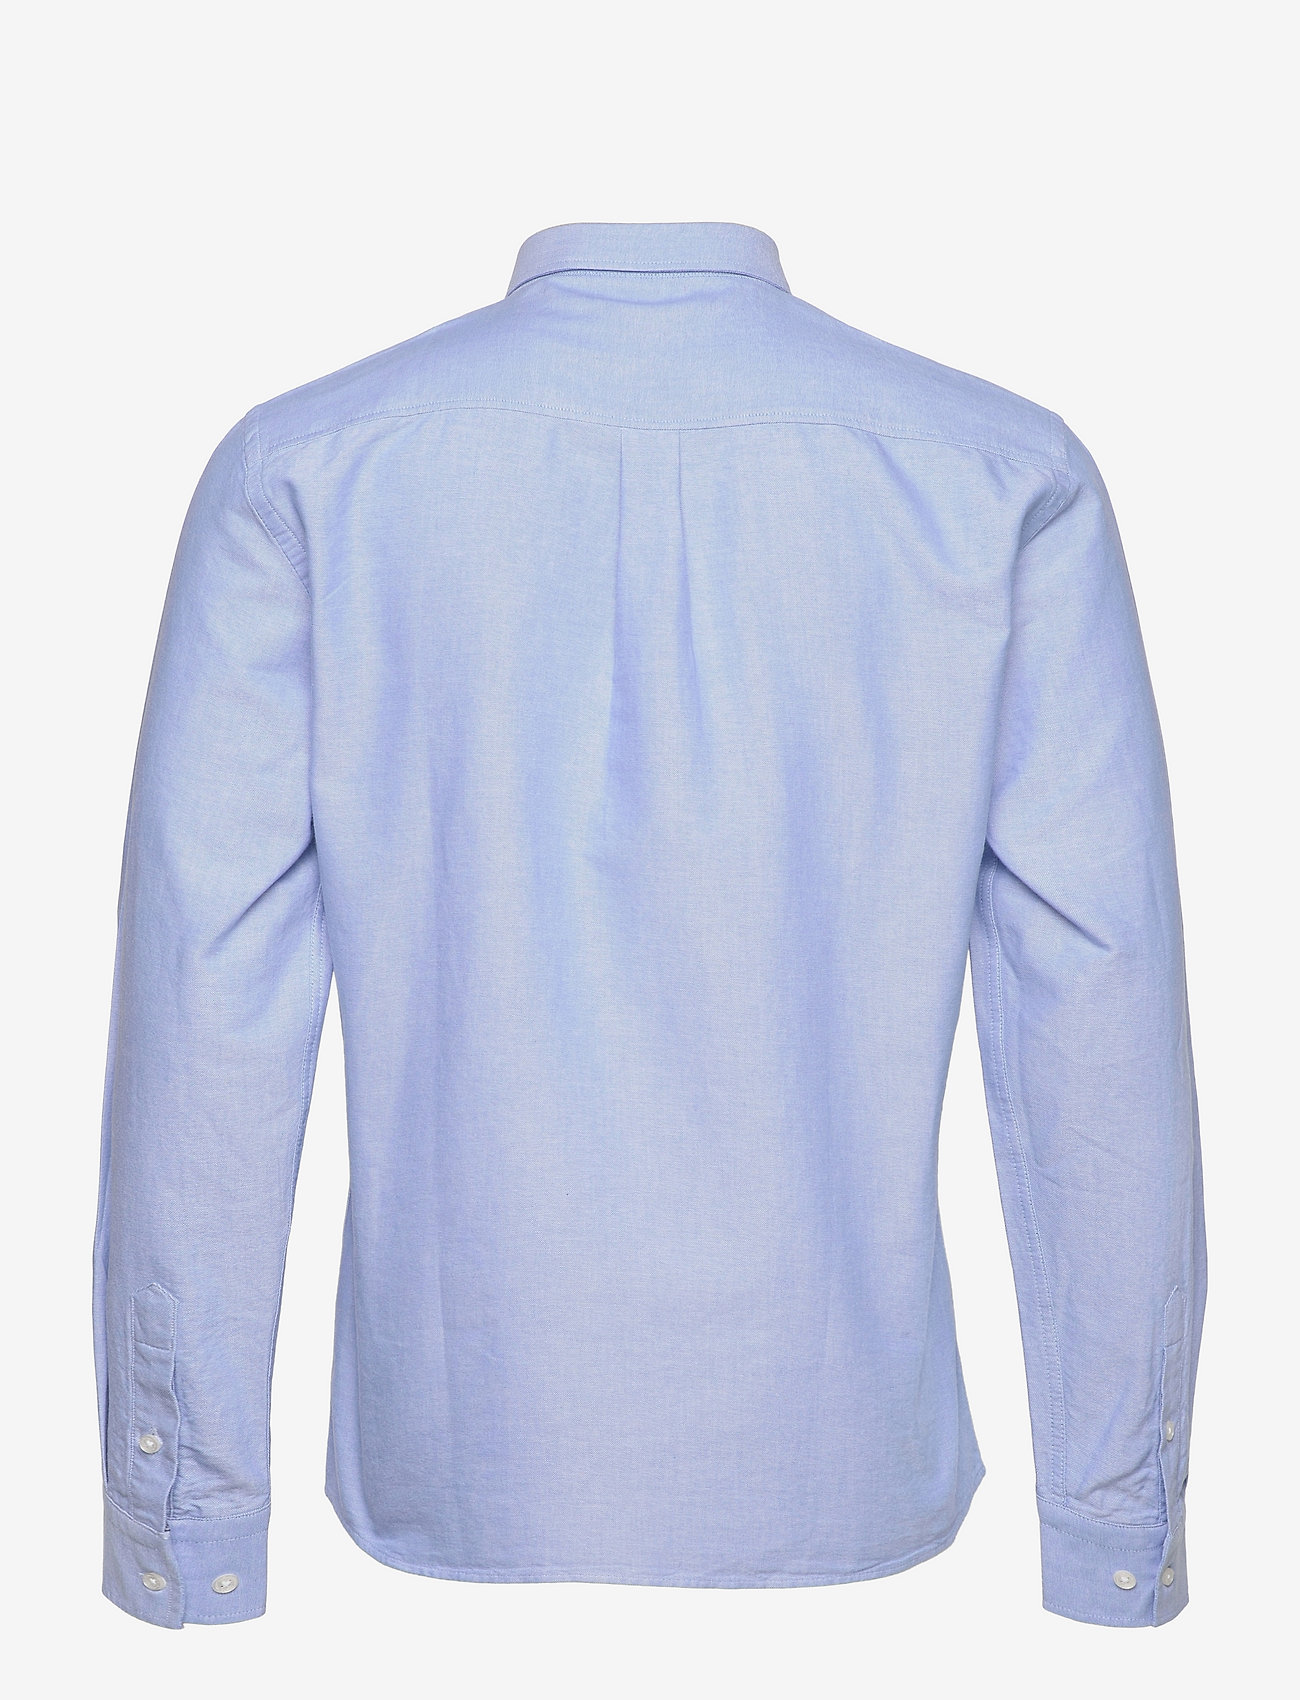 Armor Lux - Oxford shirt - oxford stila krekli - light blue - 1